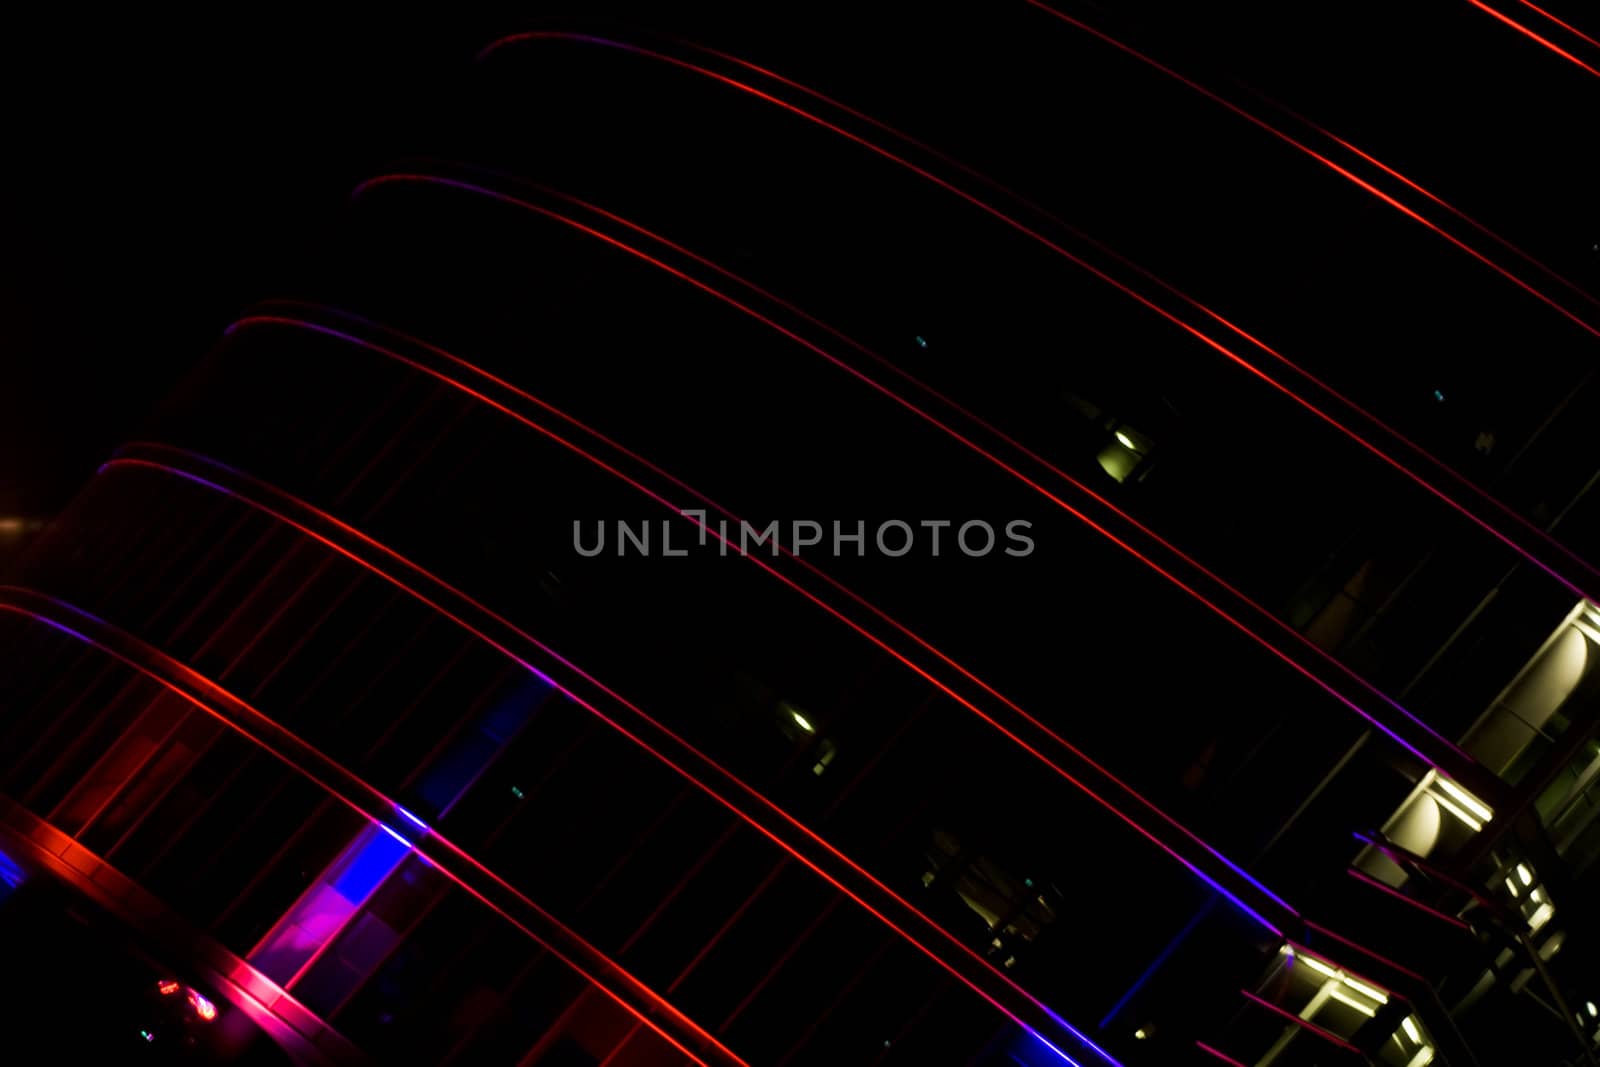 Illuminated skyscraper facade at night in downtown